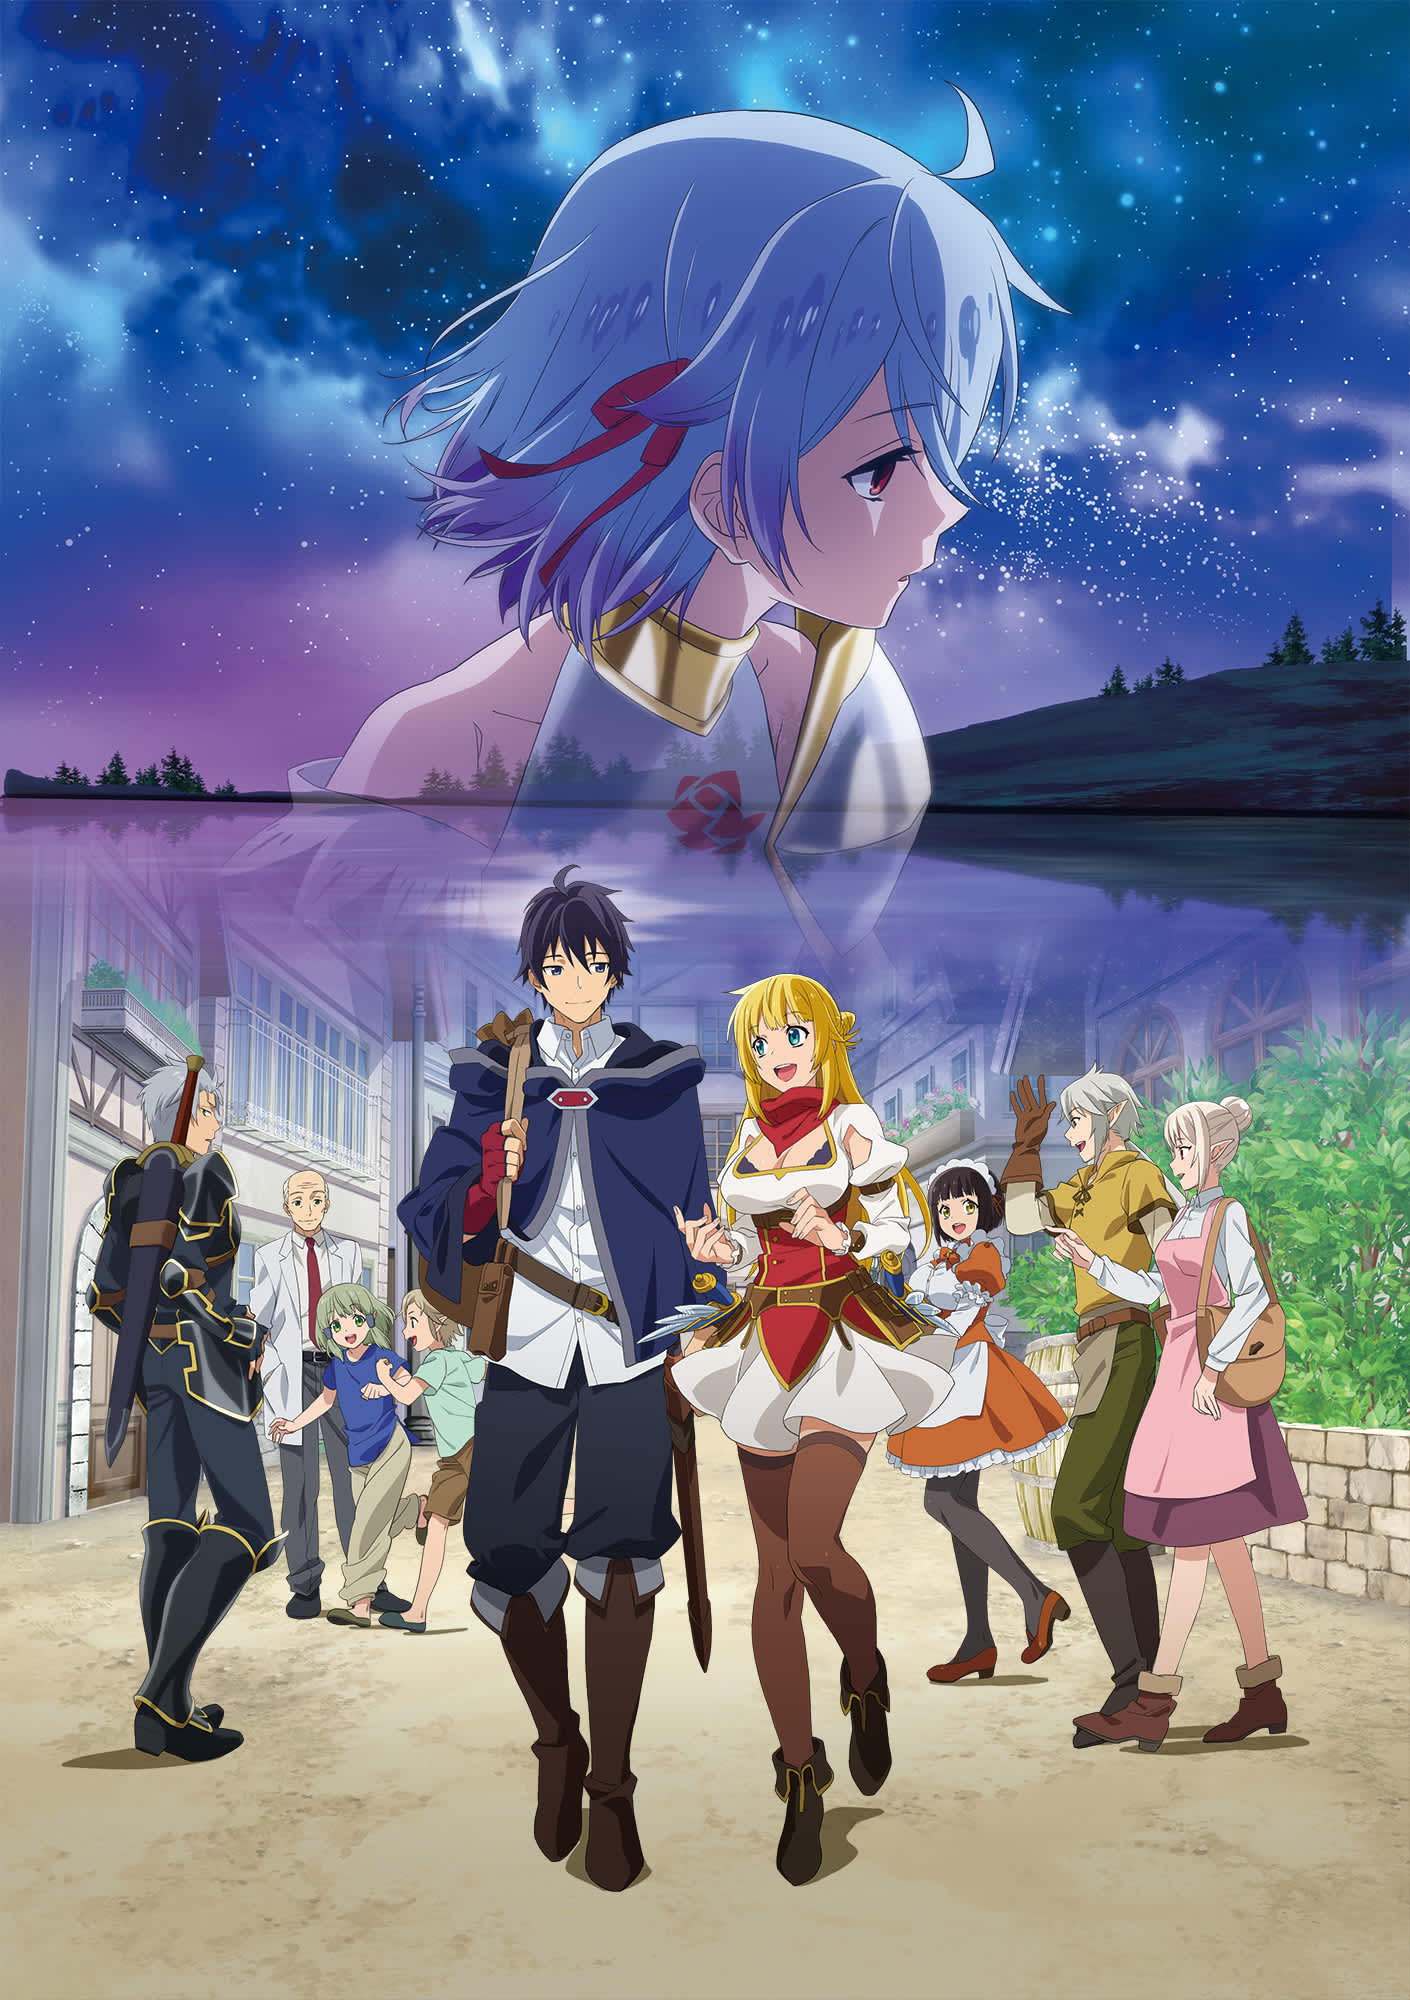 FUNimation Acquires Heroic Age – AnimeNation Anime News Blog